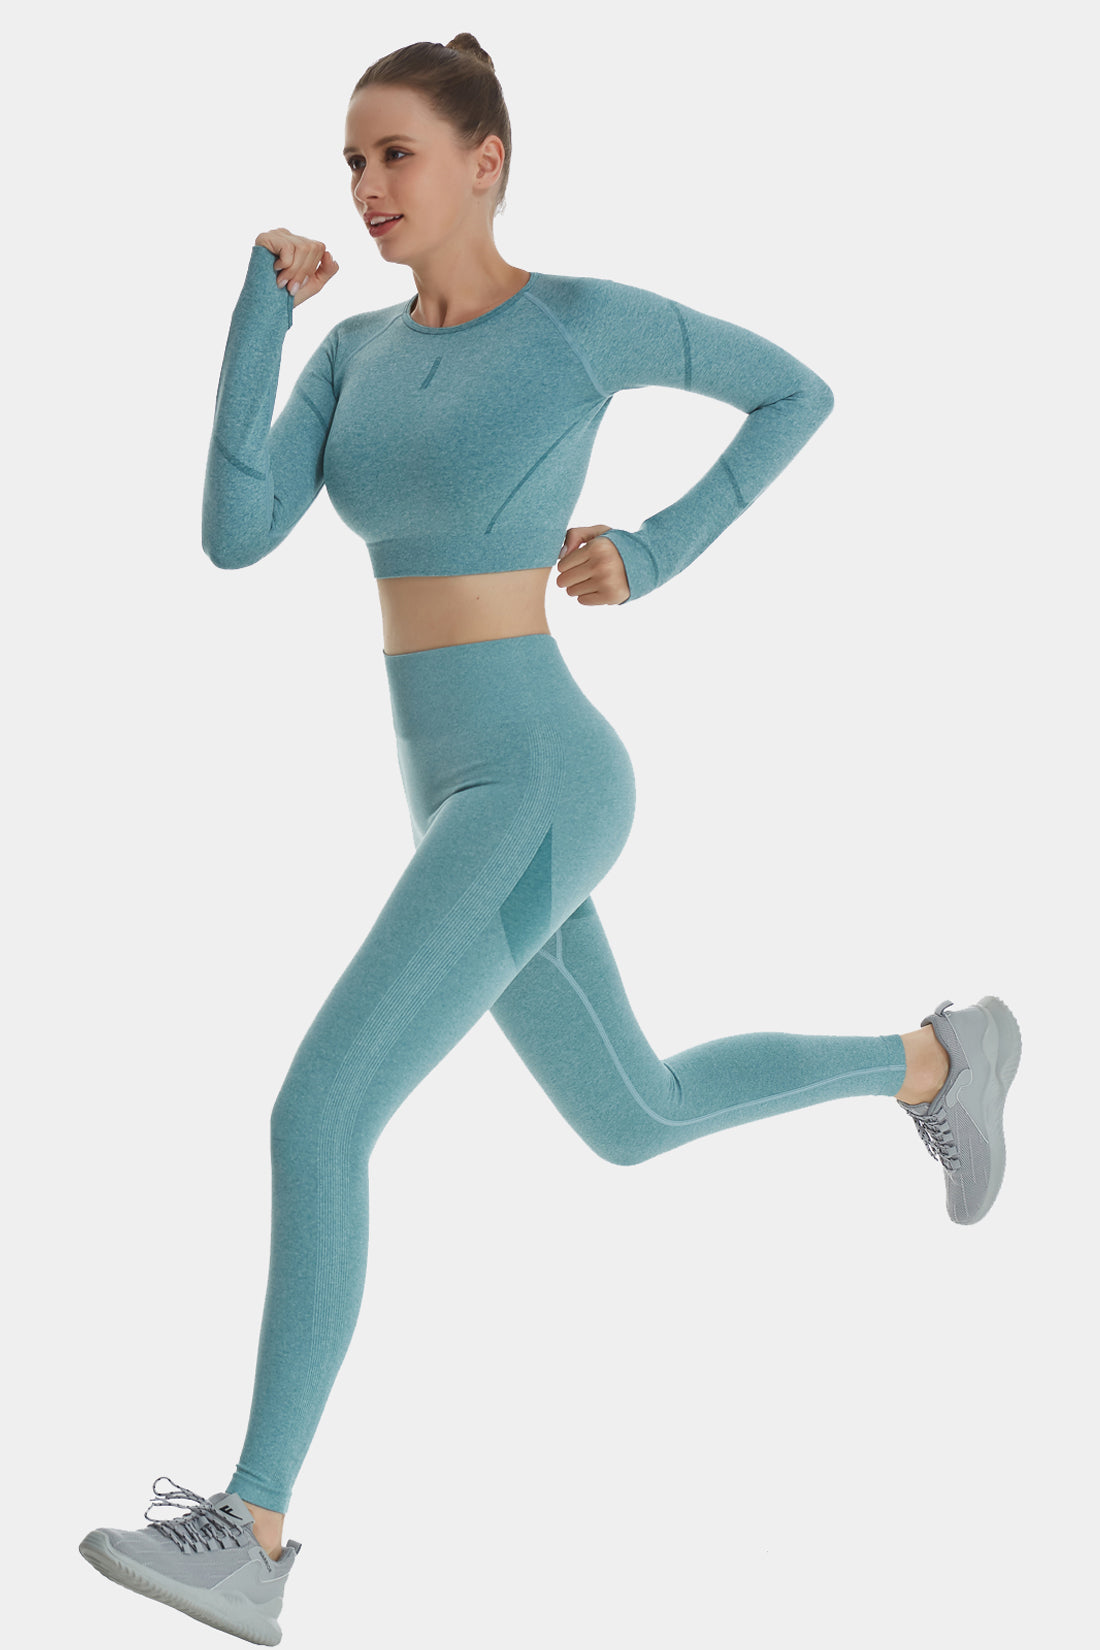 Cheap Nessaj Seamless Sport Set Women Yoga Suit Long Sleeve Crop Top Shirt  Sexy Fitness Leggings Workout Outfit